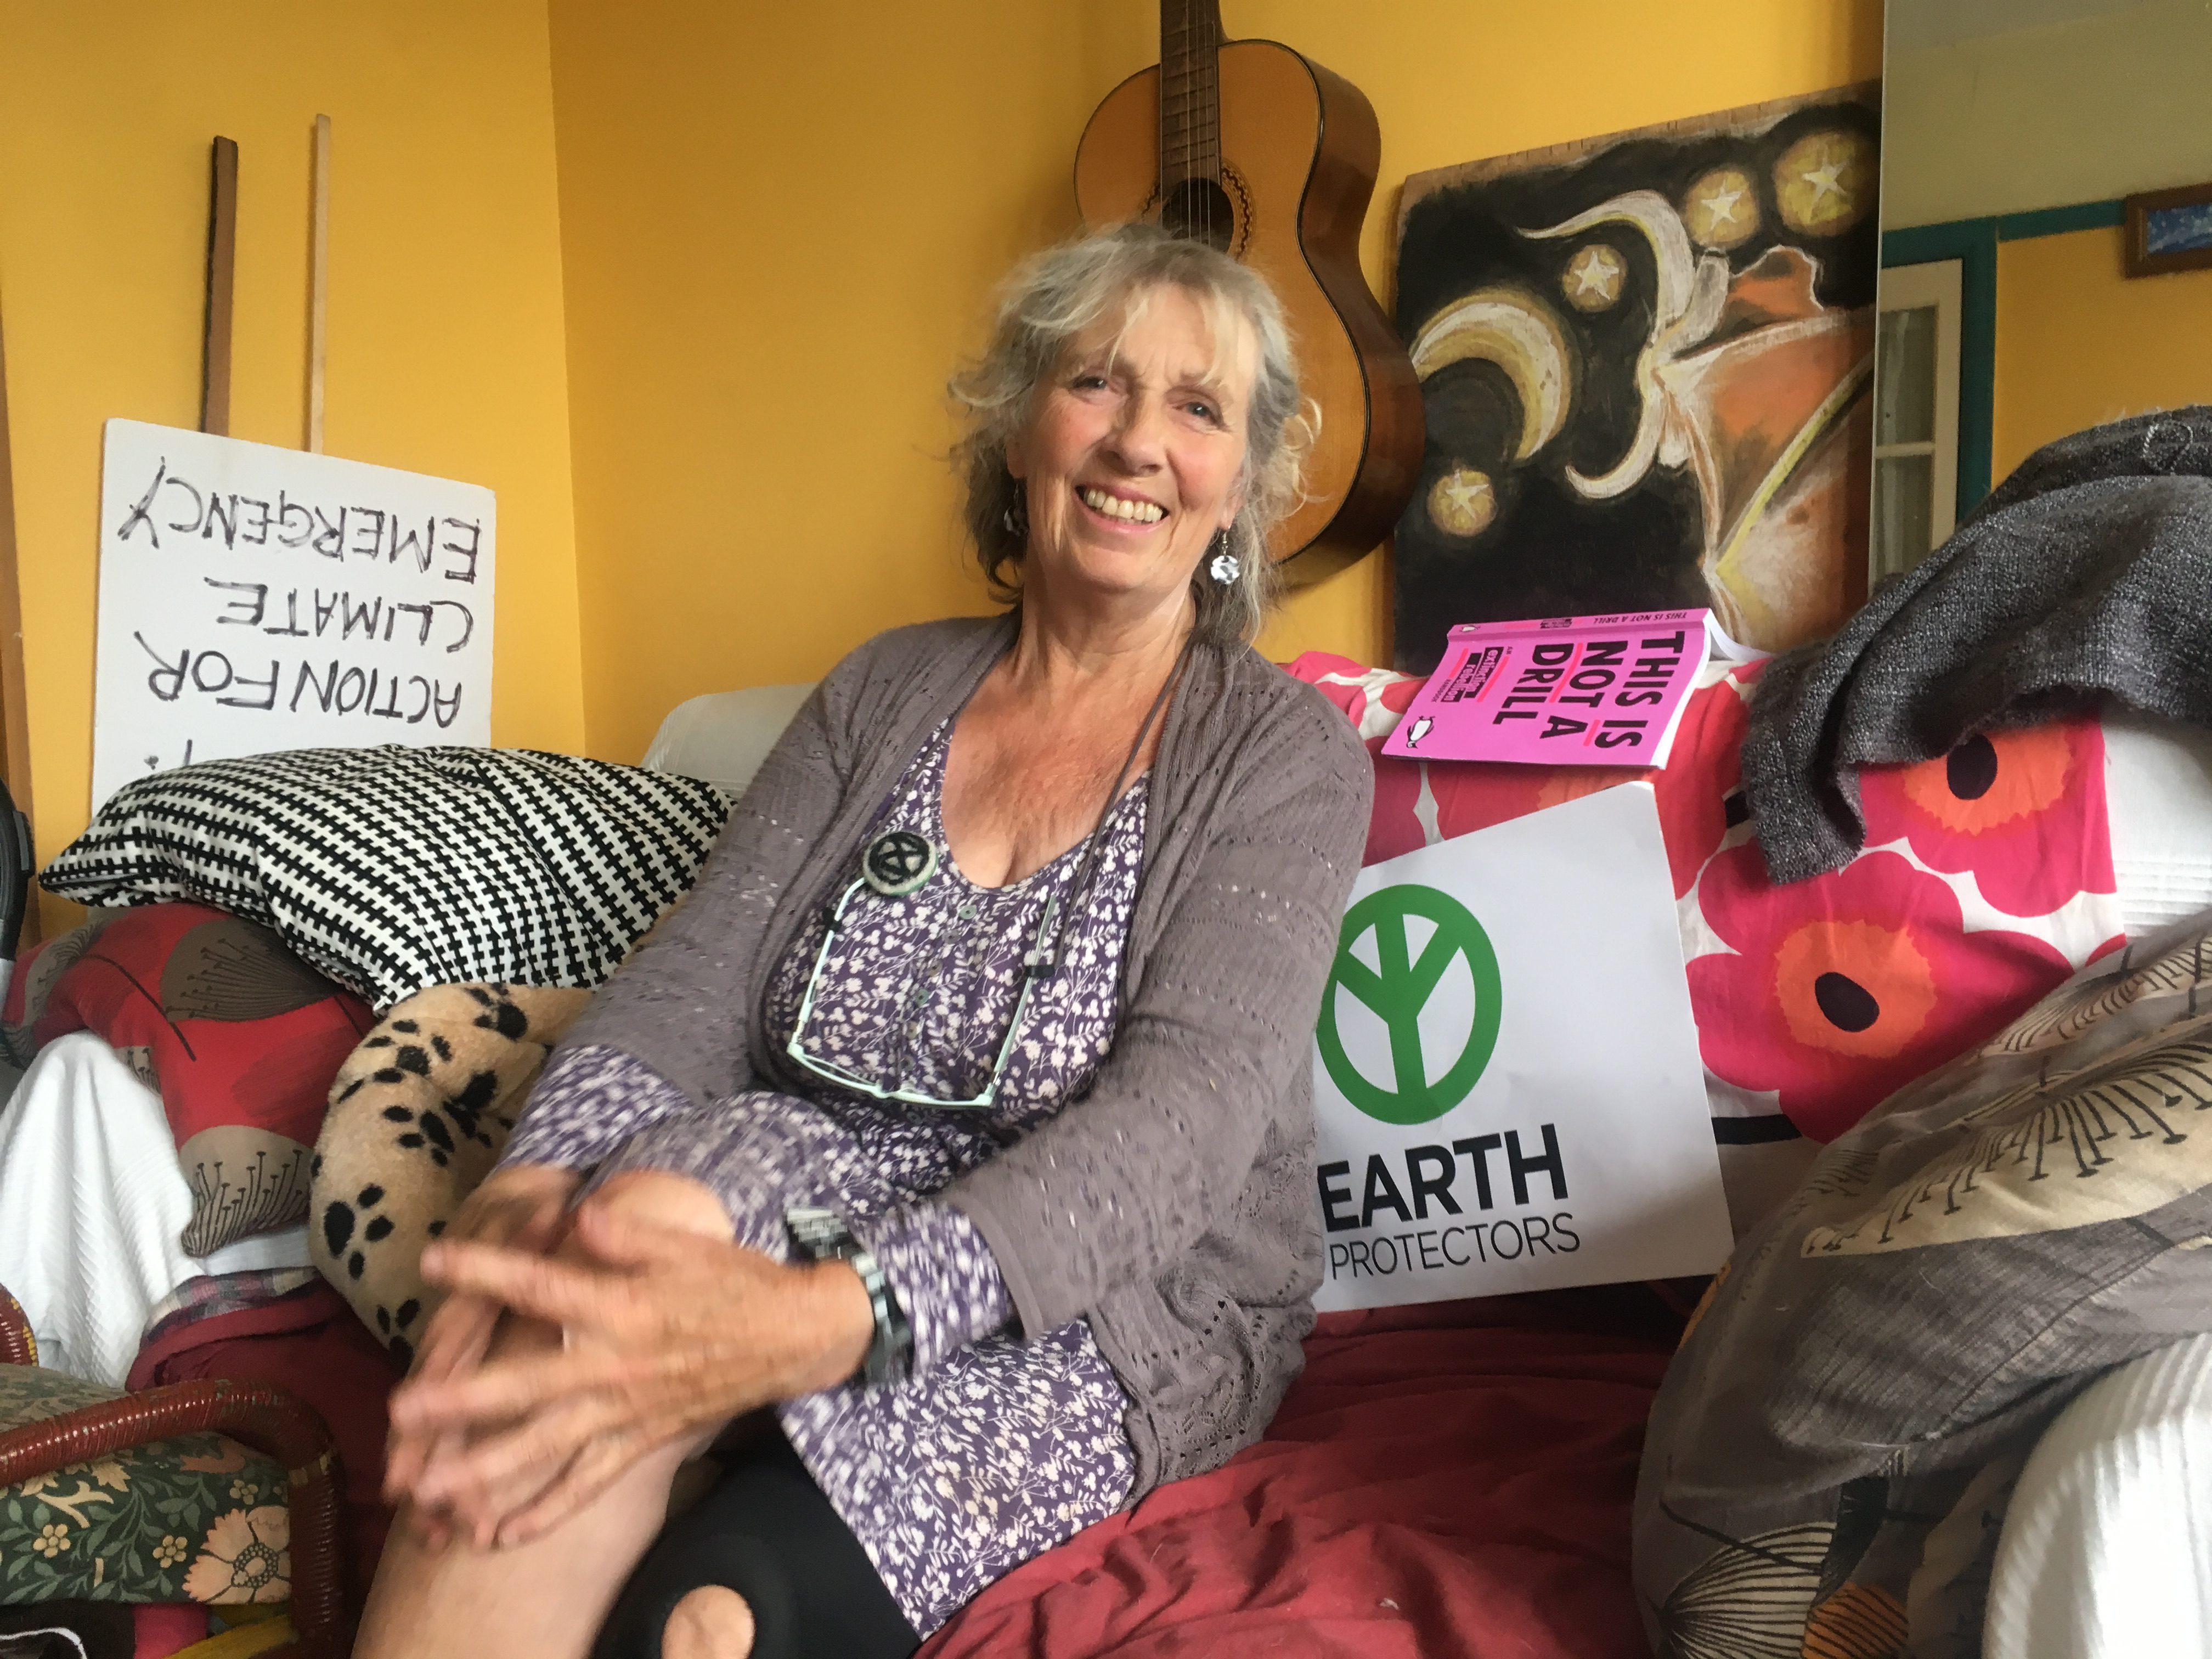 Marcea, my Airbnb host, a delightful climate activist